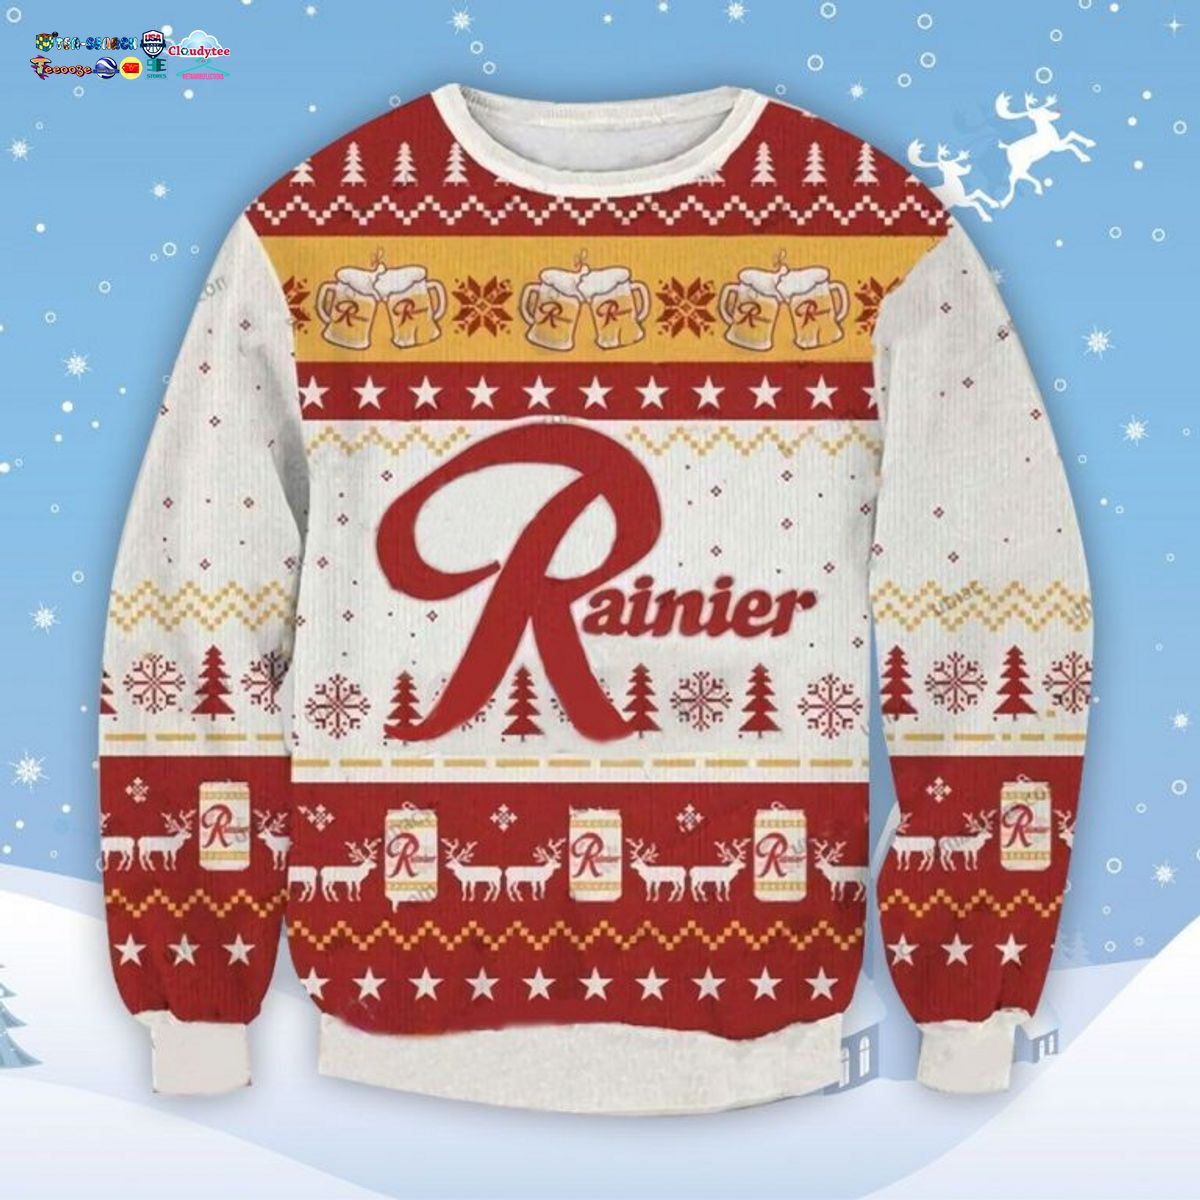 Rainier Ver 2 Ugly Christmas Sweater